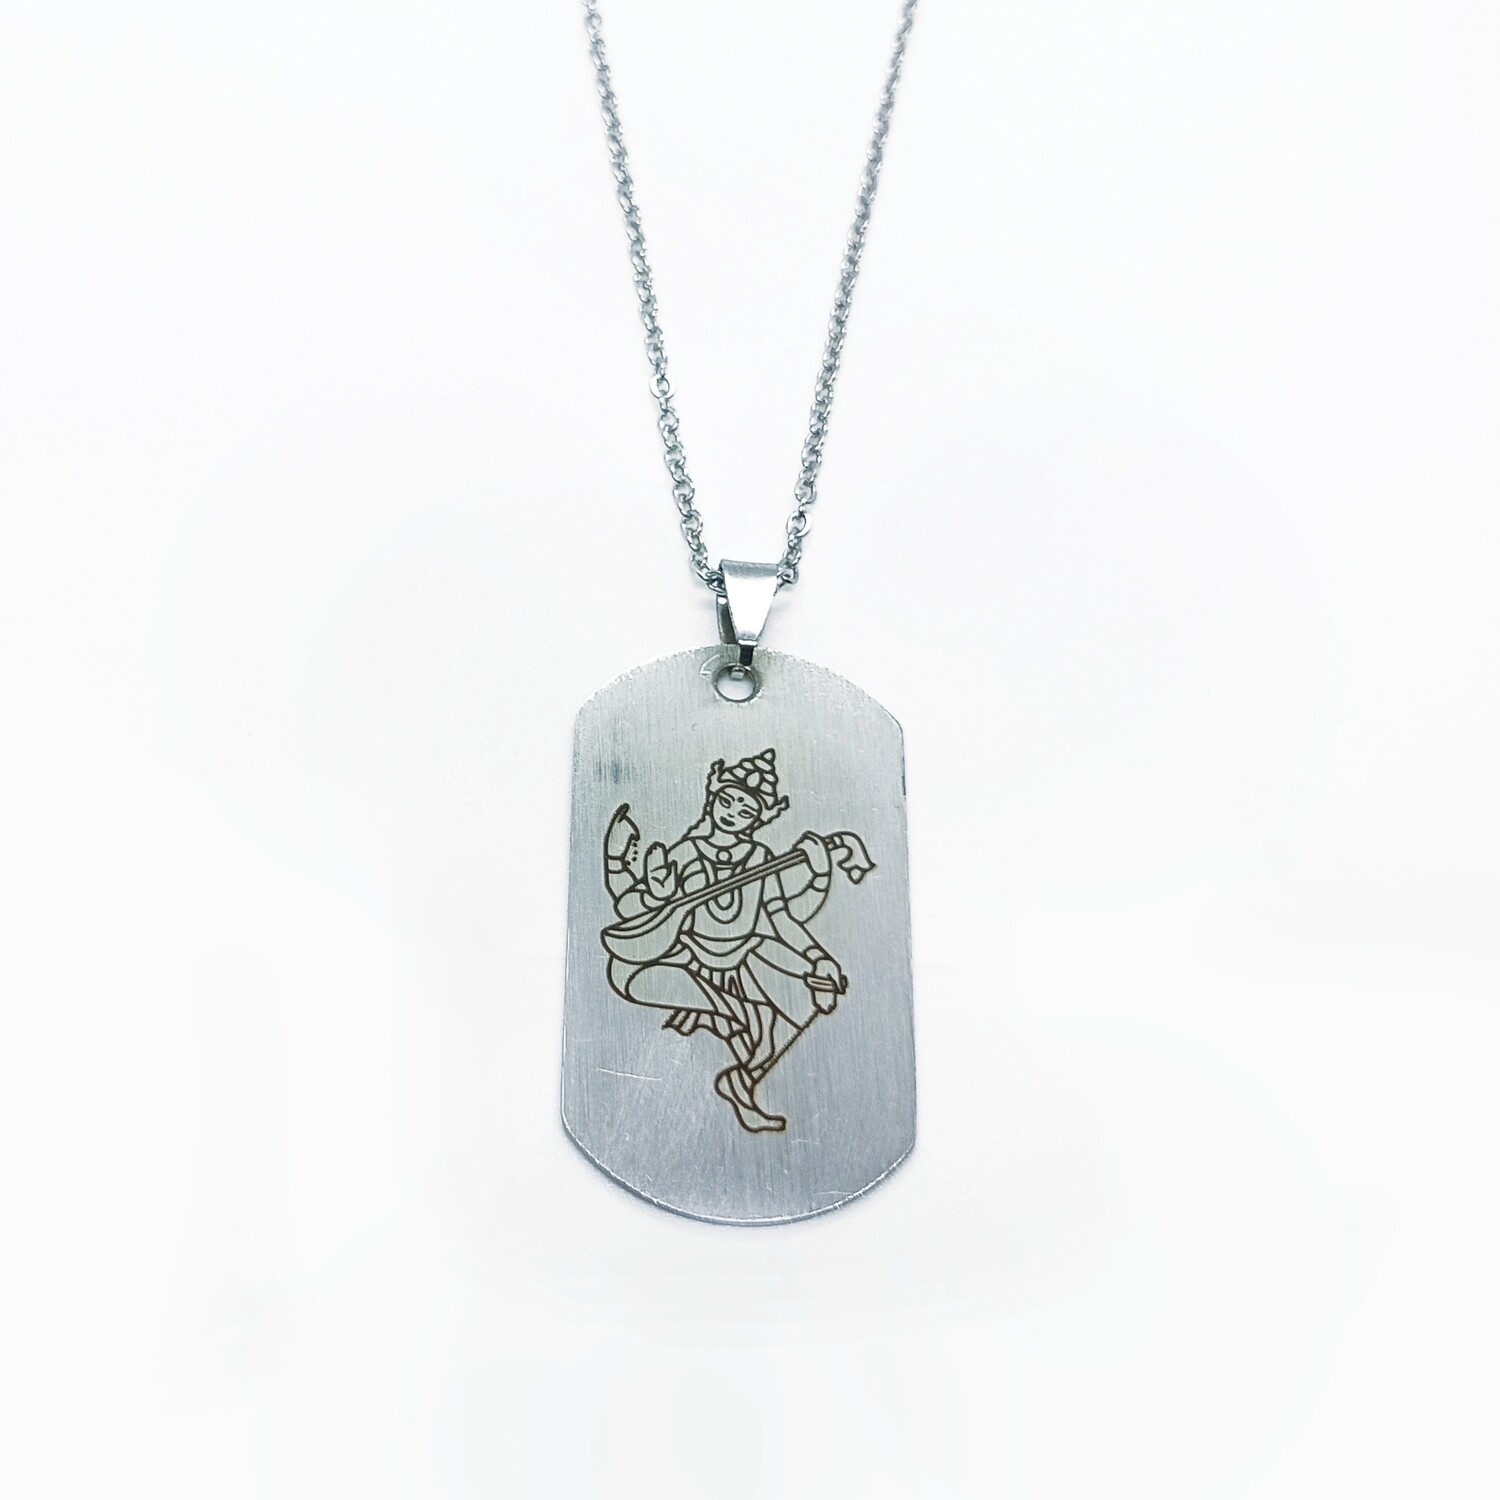 Goddess Saraswati necklace engraved